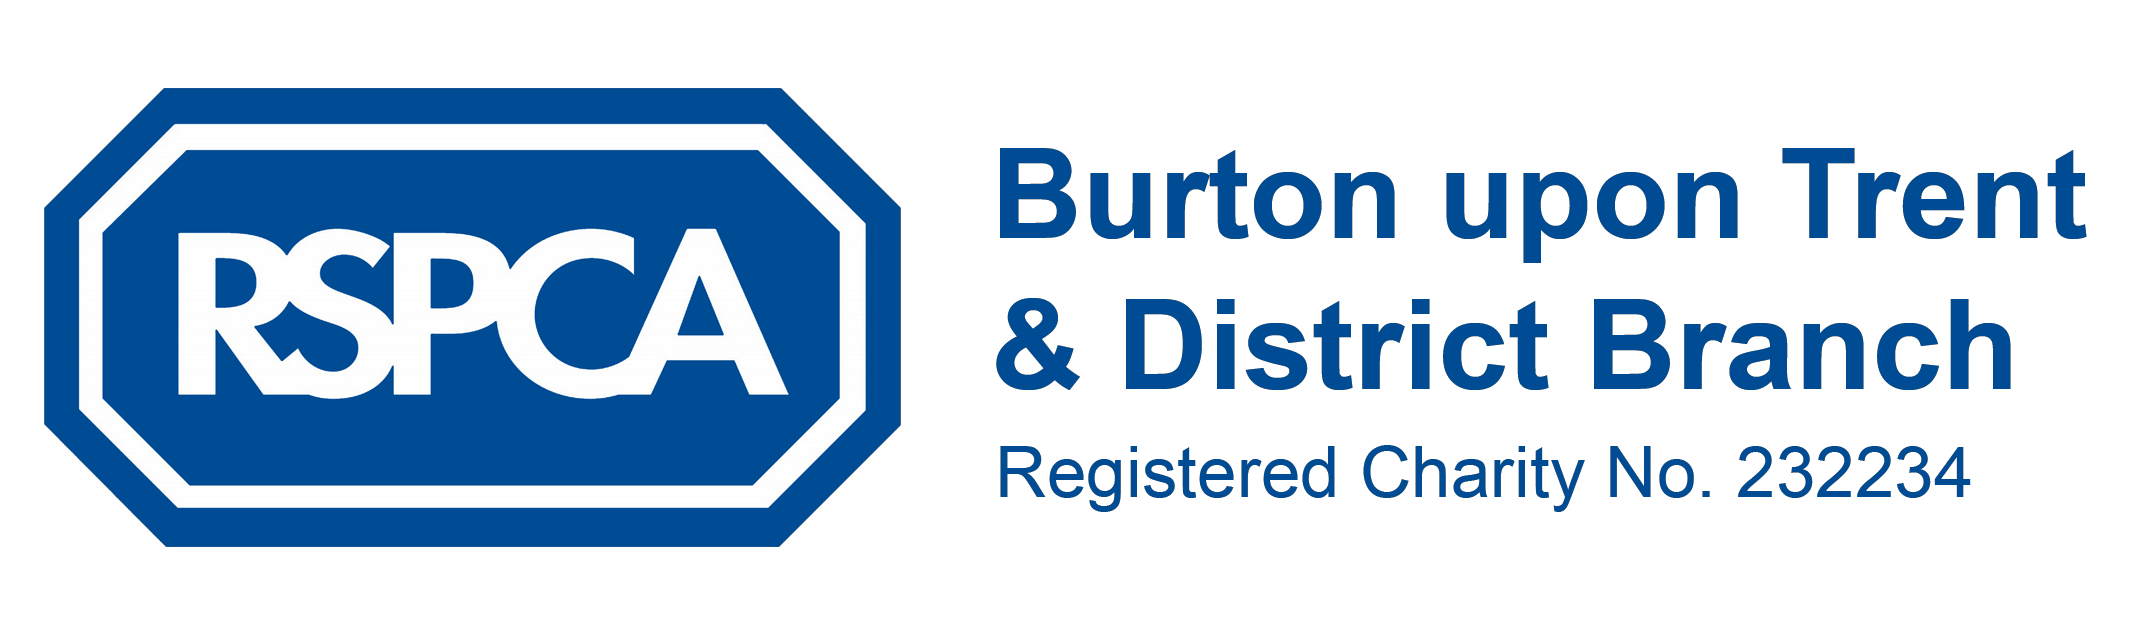 RSPCA Burton upon Trent & District Branch